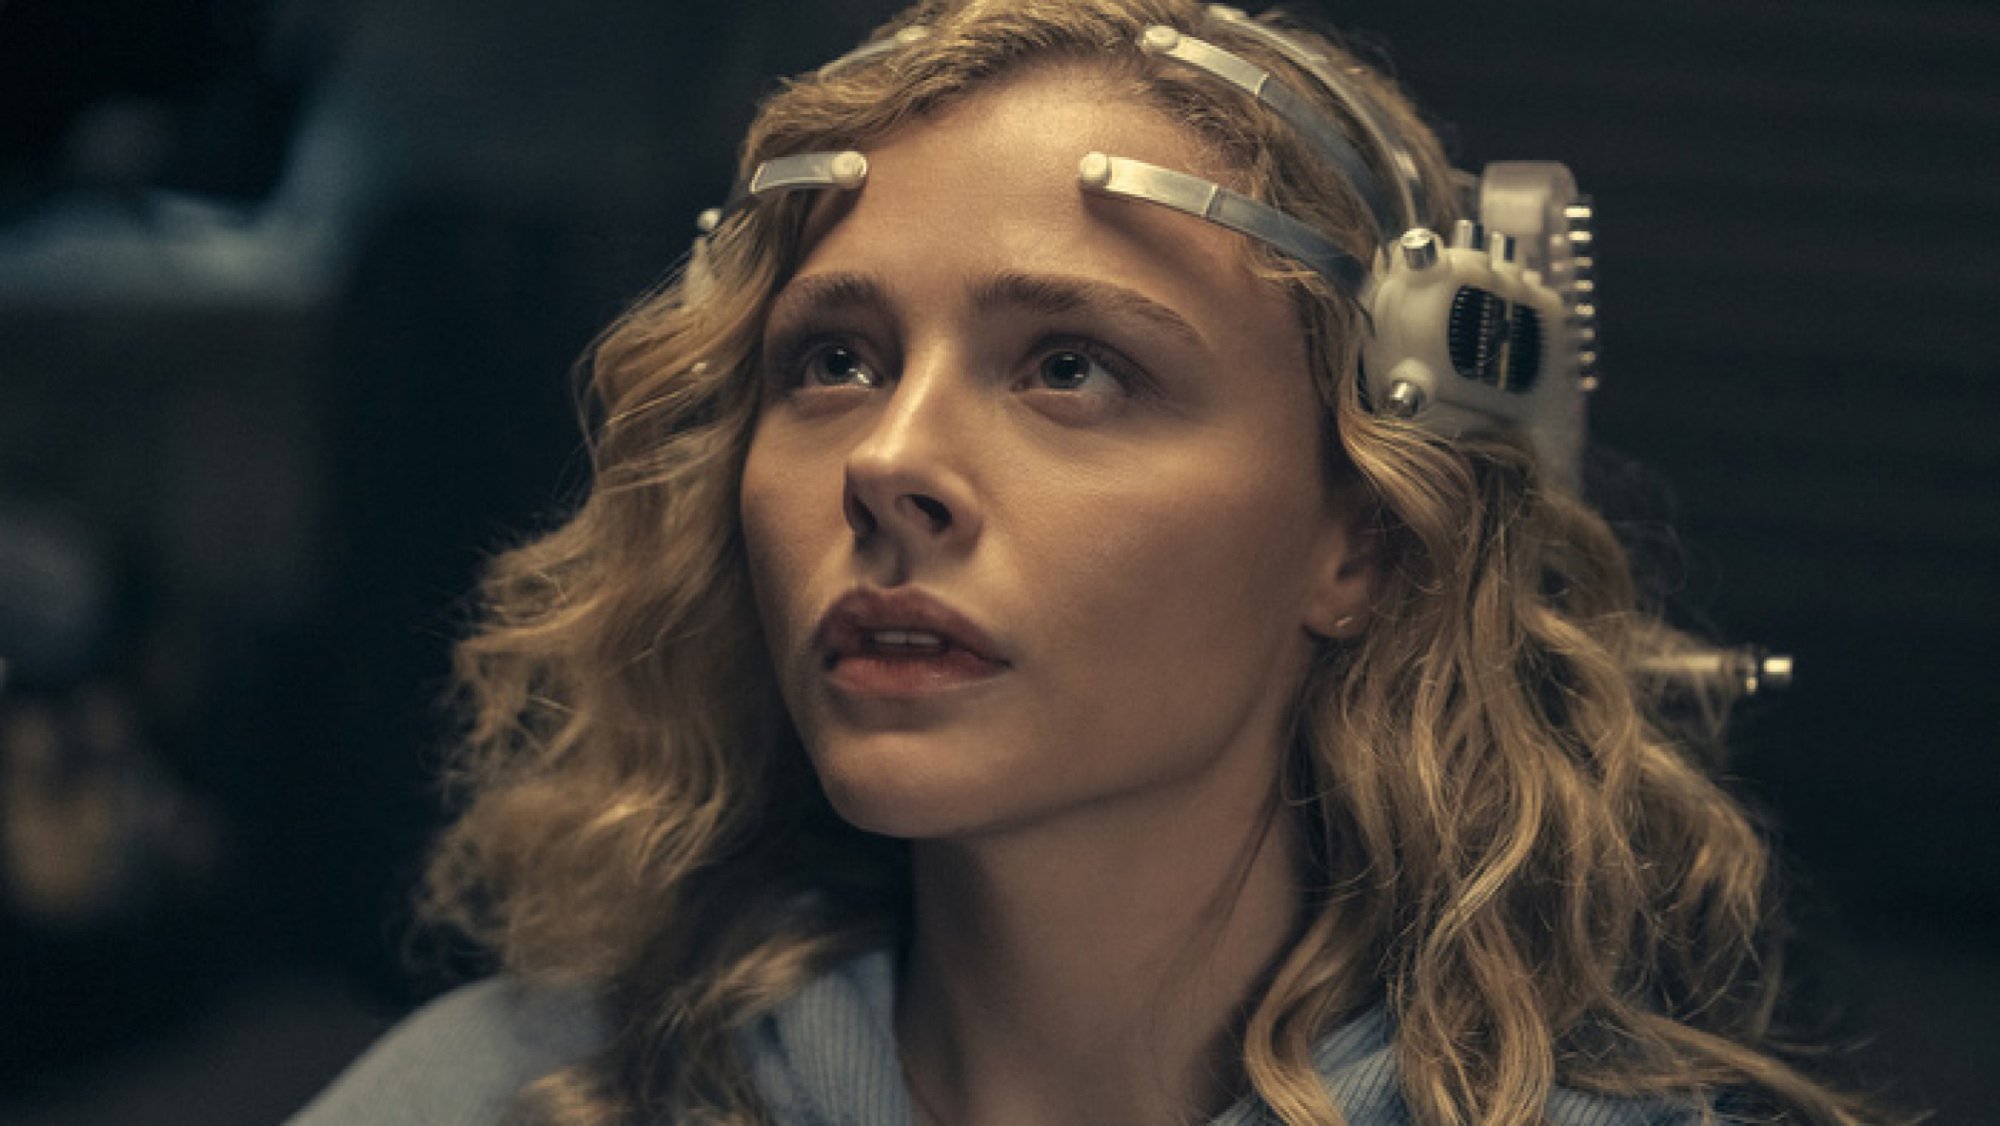 A blonde woman wears a futuristic headset.